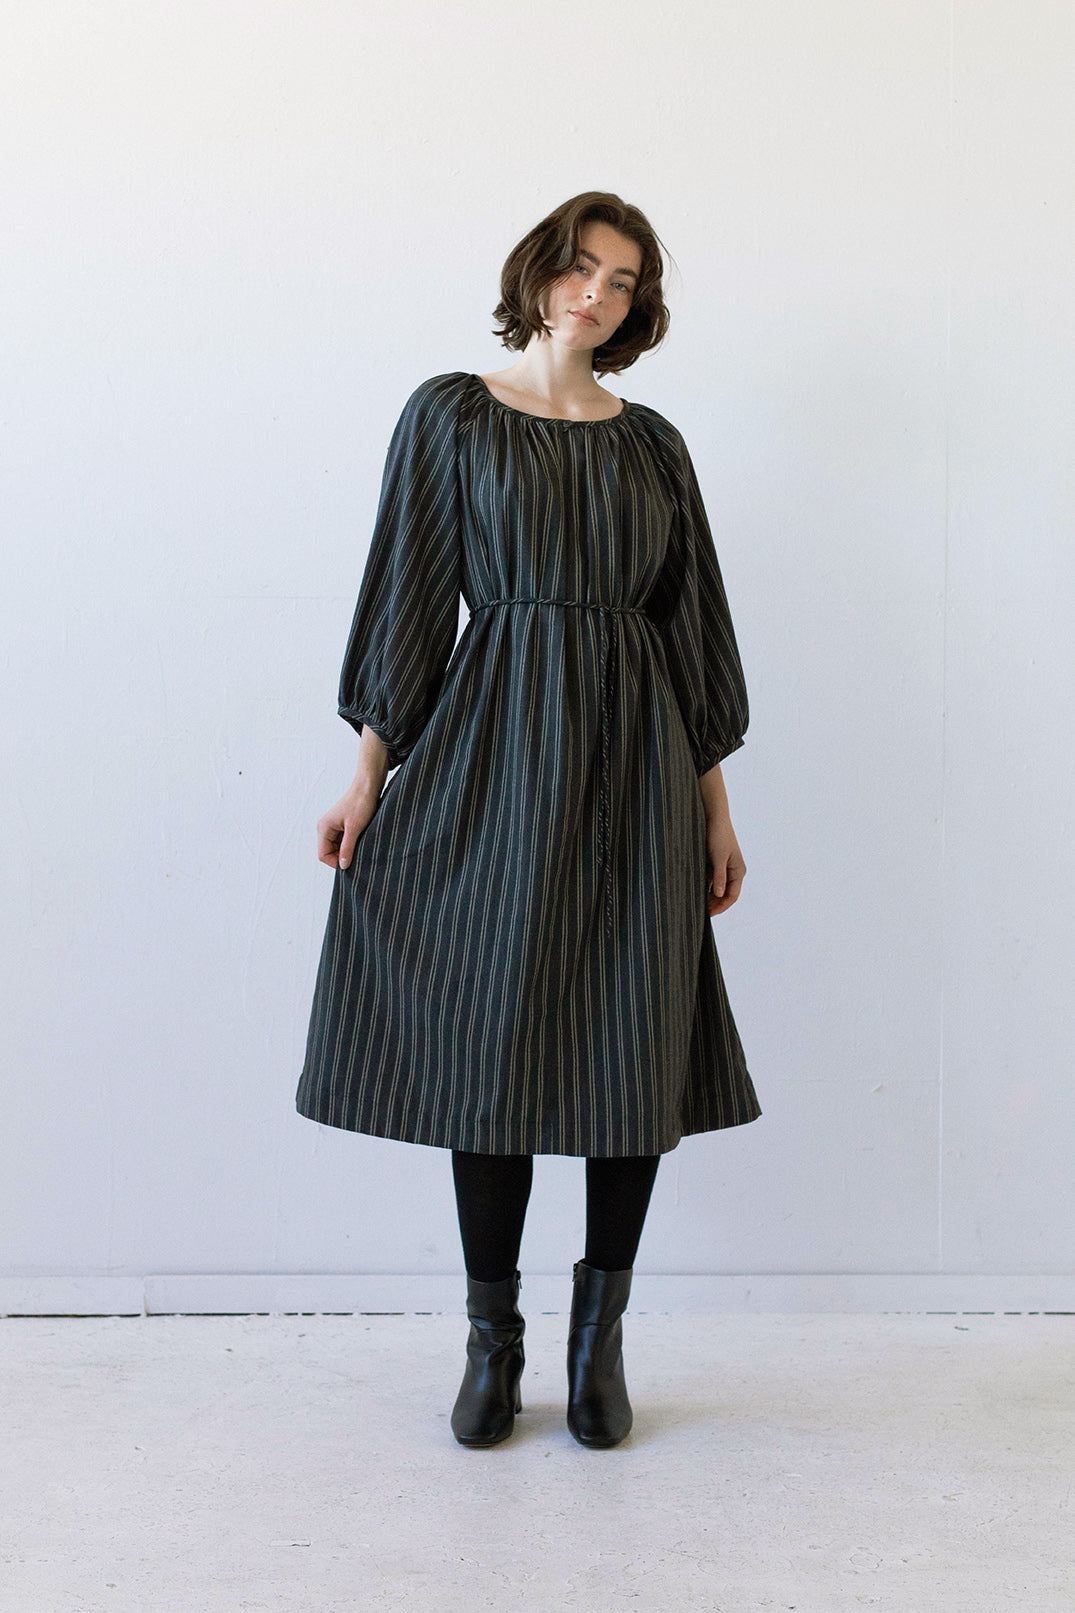 SAMPLE SALE - Prisca Dress in Charcoal Pinstripe - SMALL/MEDIUM